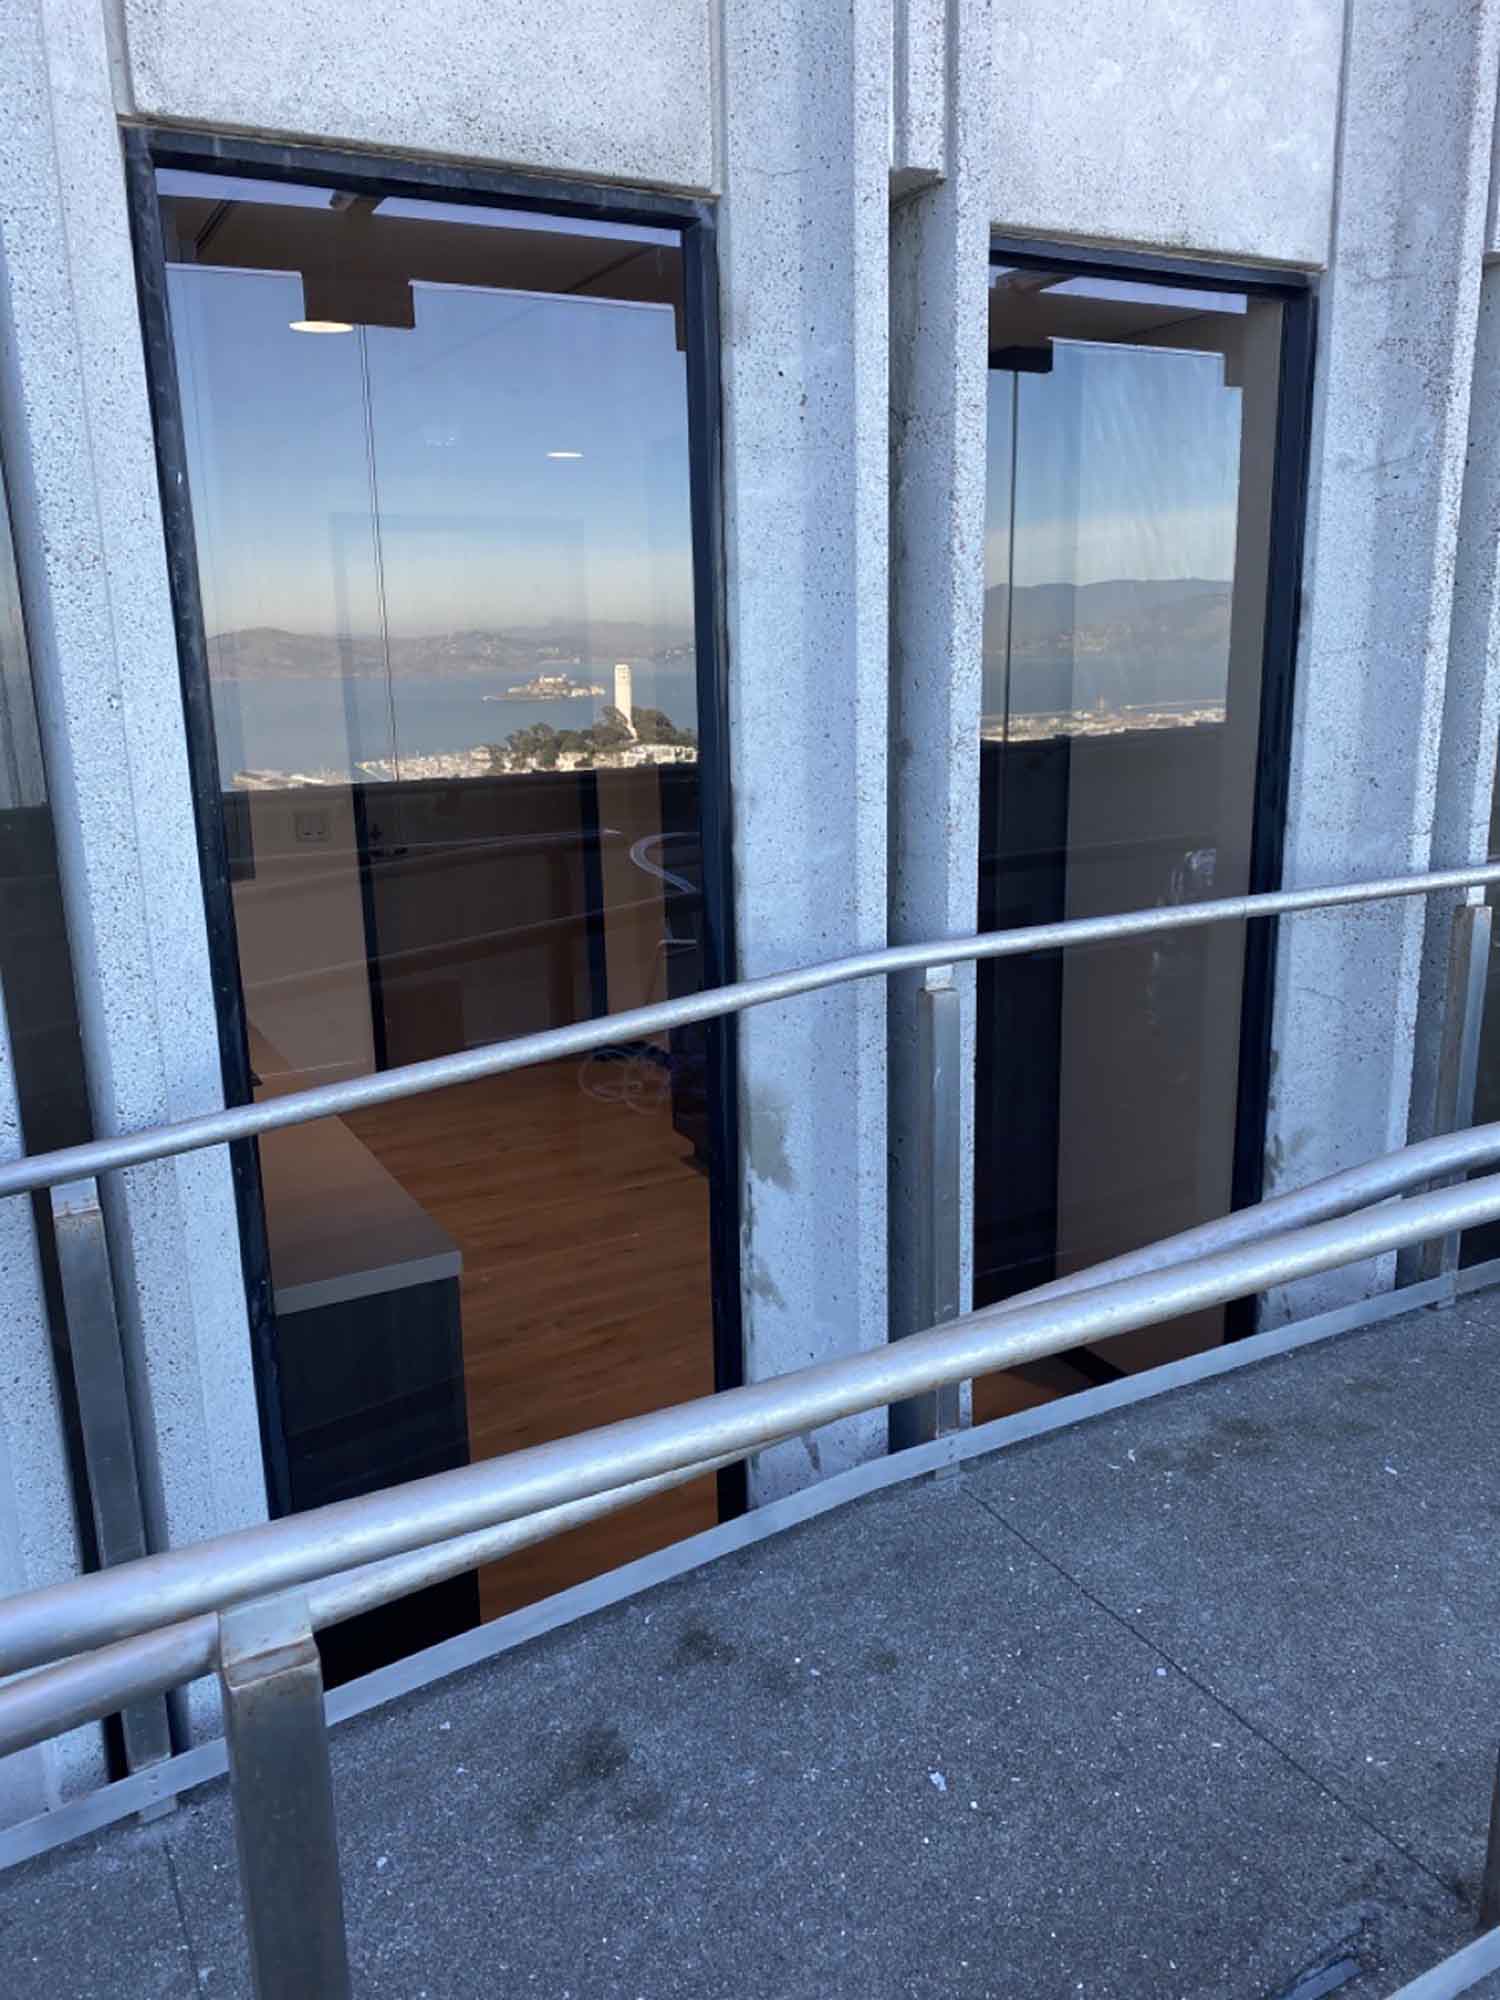 ClimatePro Installs 3M Sun Control Window Film In  A San Francisco Office